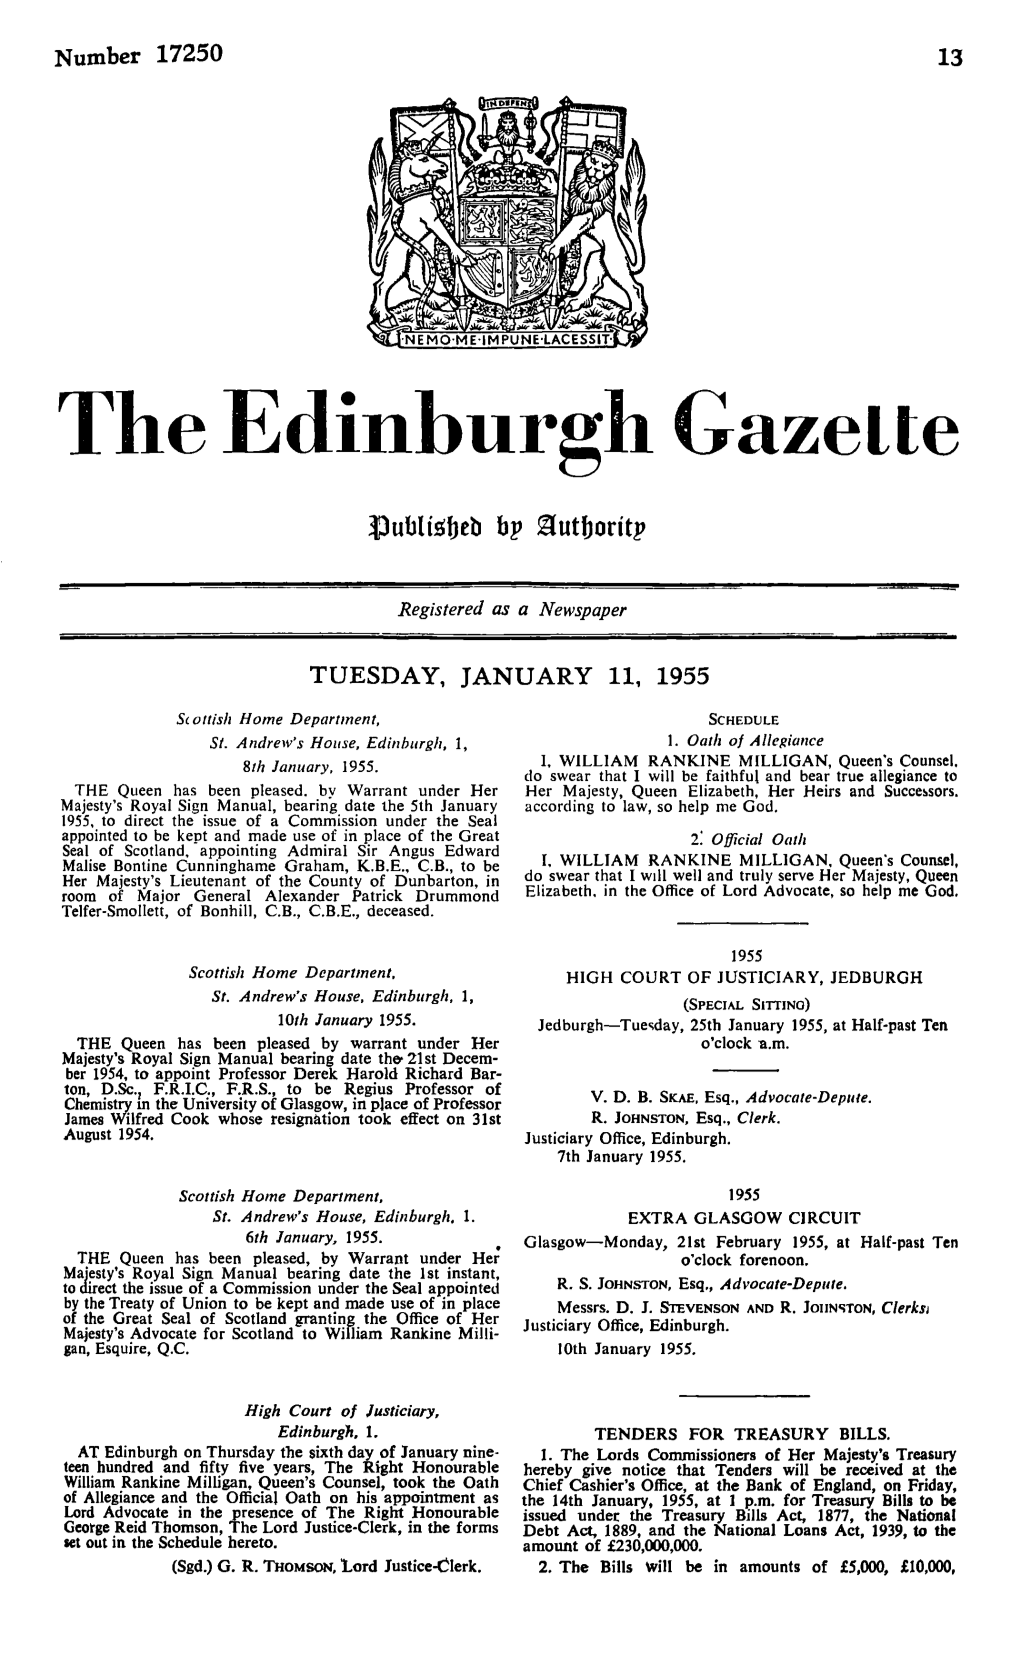 The Edinburgh Gazelle